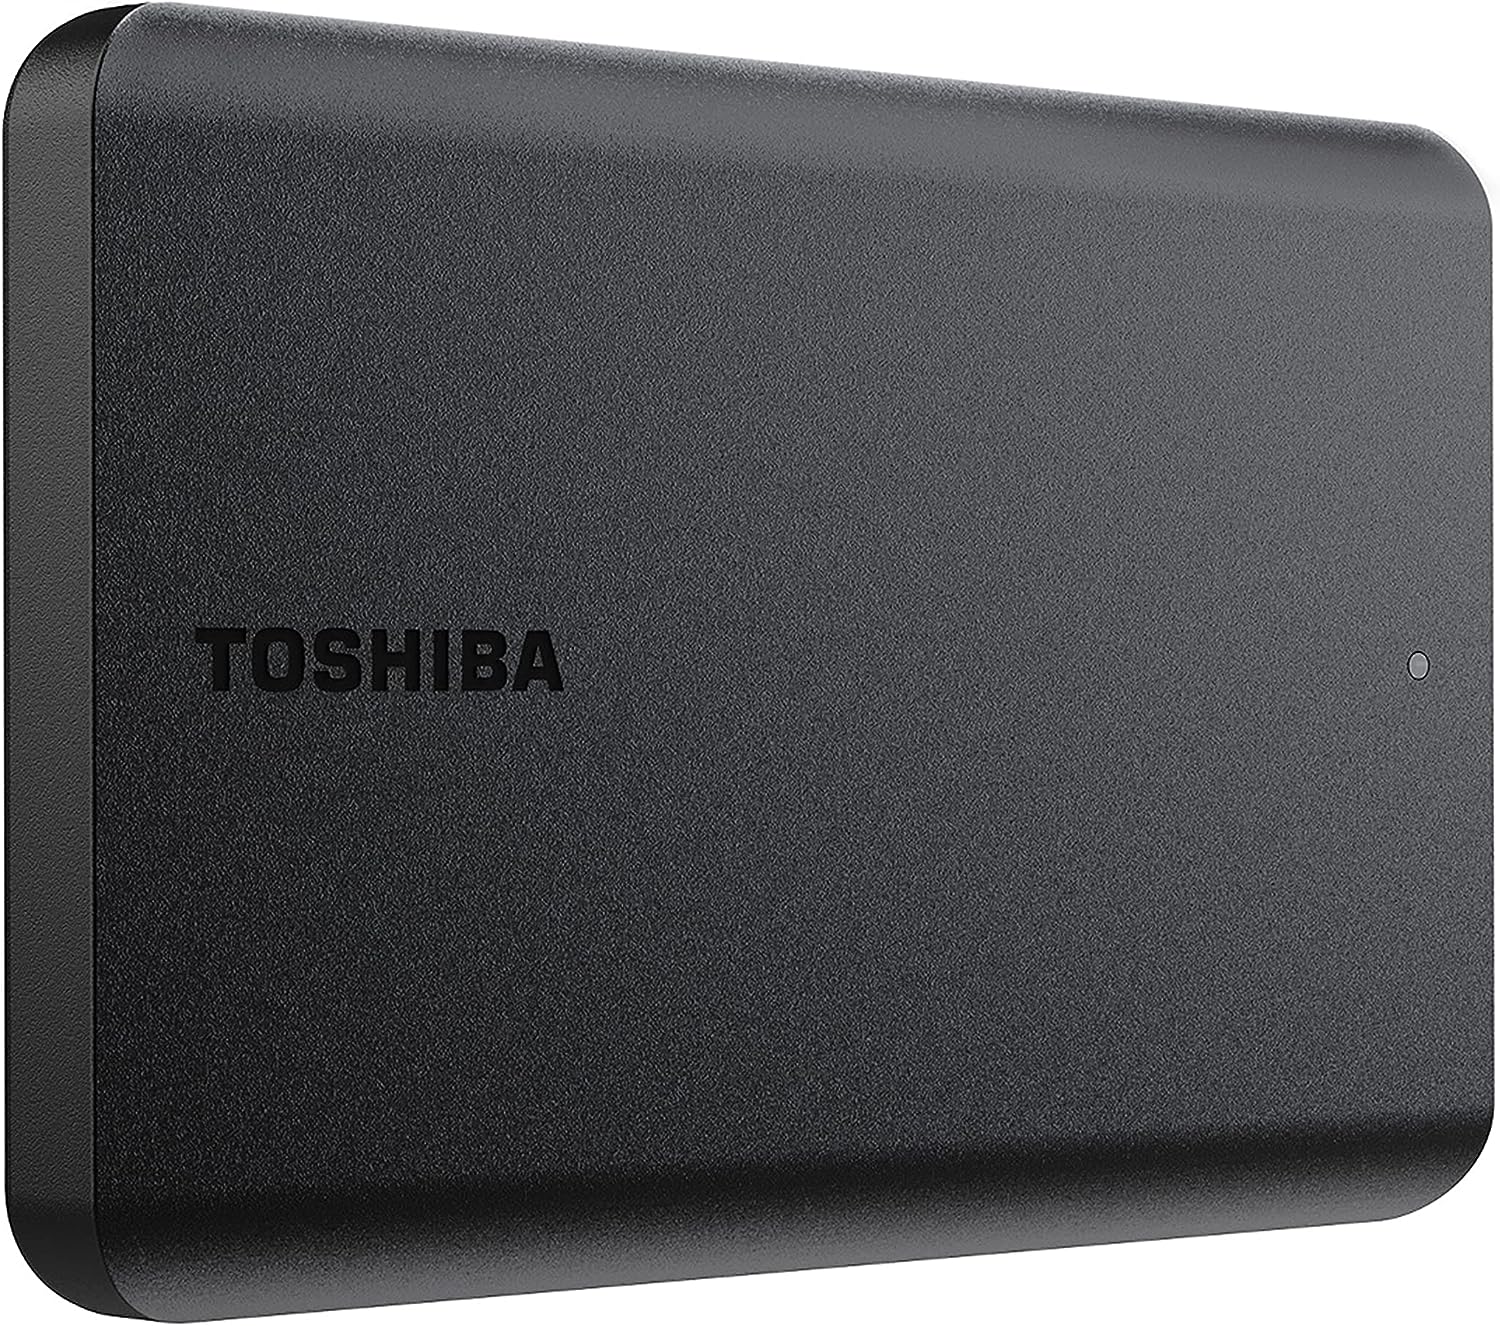 Toshiba canvio basics 1tb portable external hard drive